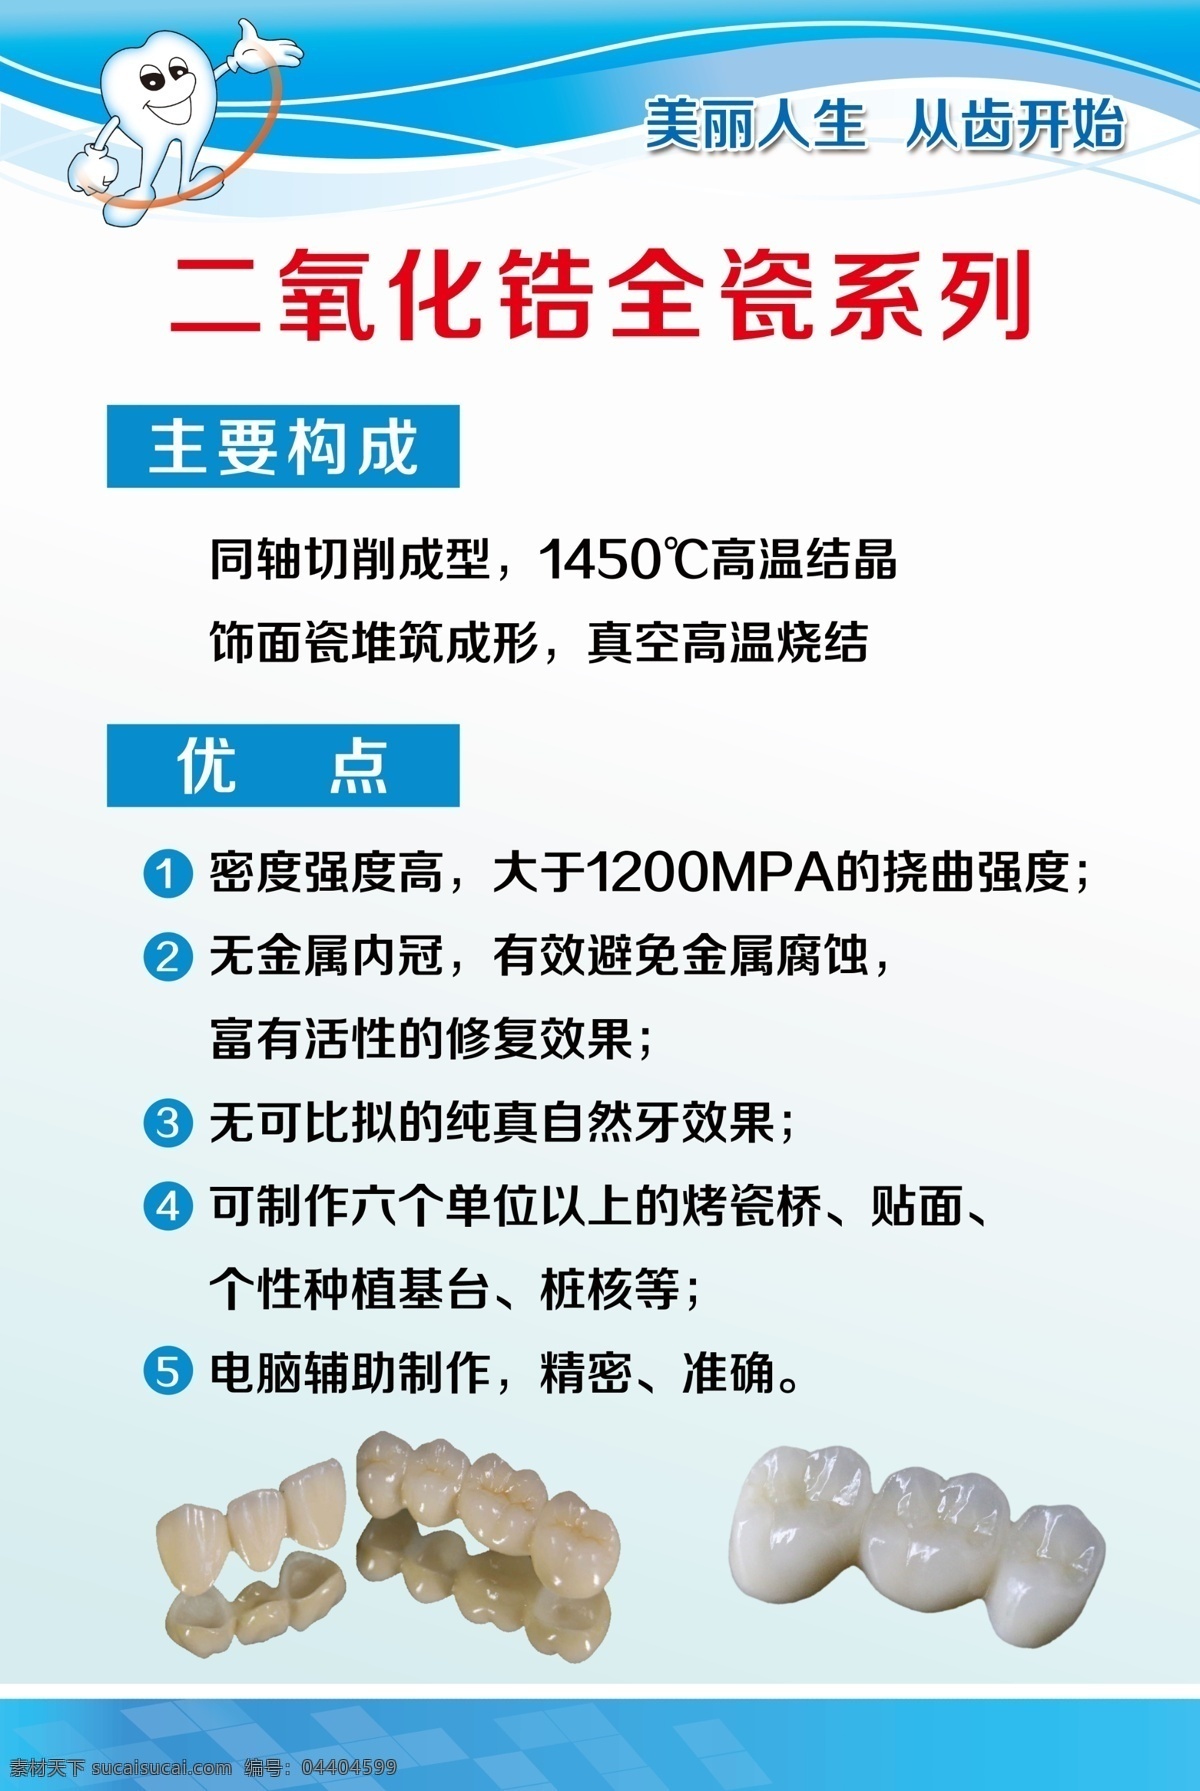 X-CERA 3D White 氧化锆 瓷块 - 氧化锆义齿 - 深圳翔通医疗科技有限公司